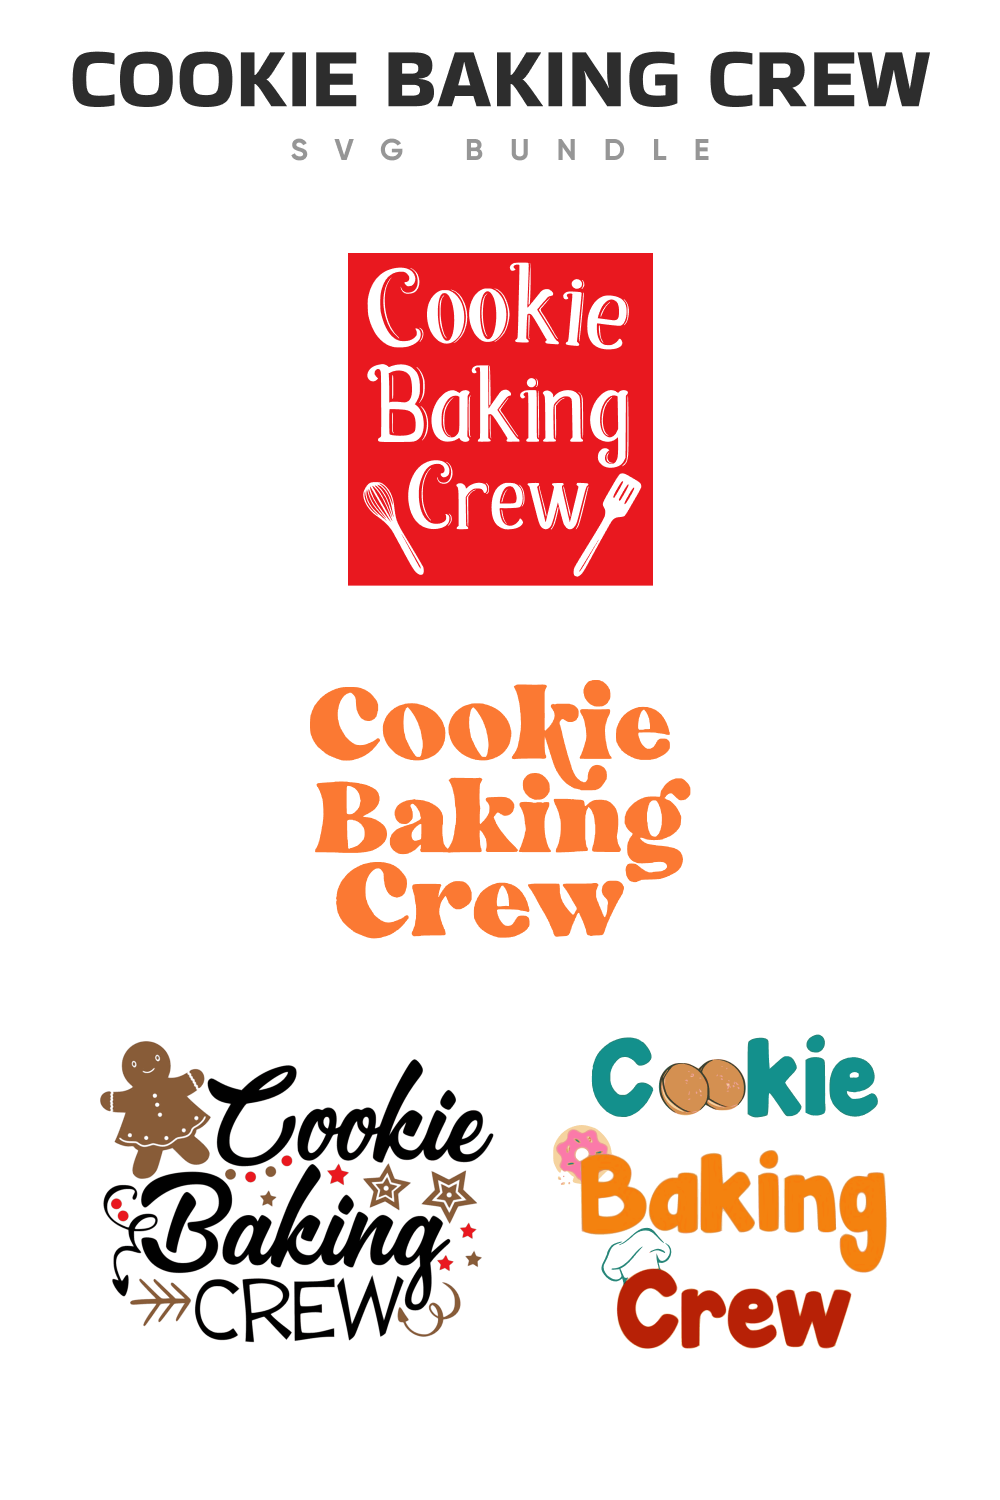 Various of cookie baking crews.